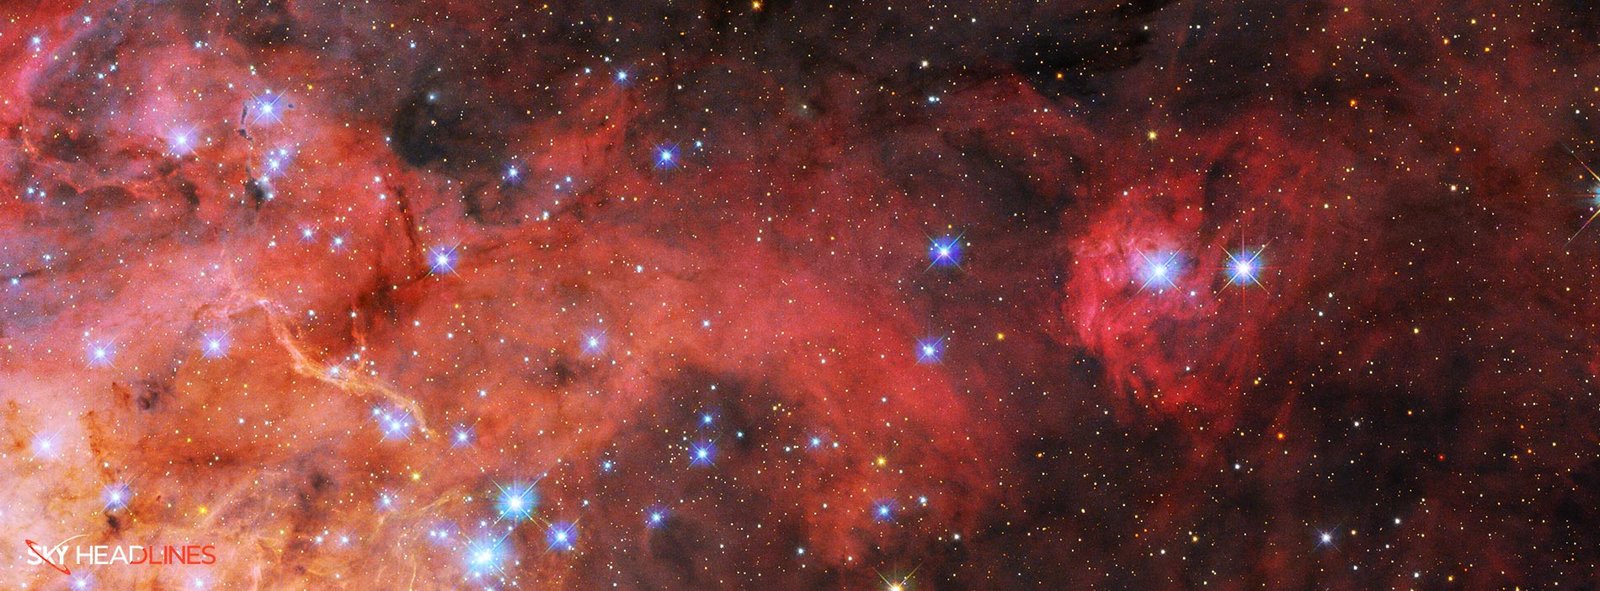 Tarantula Nebula Image